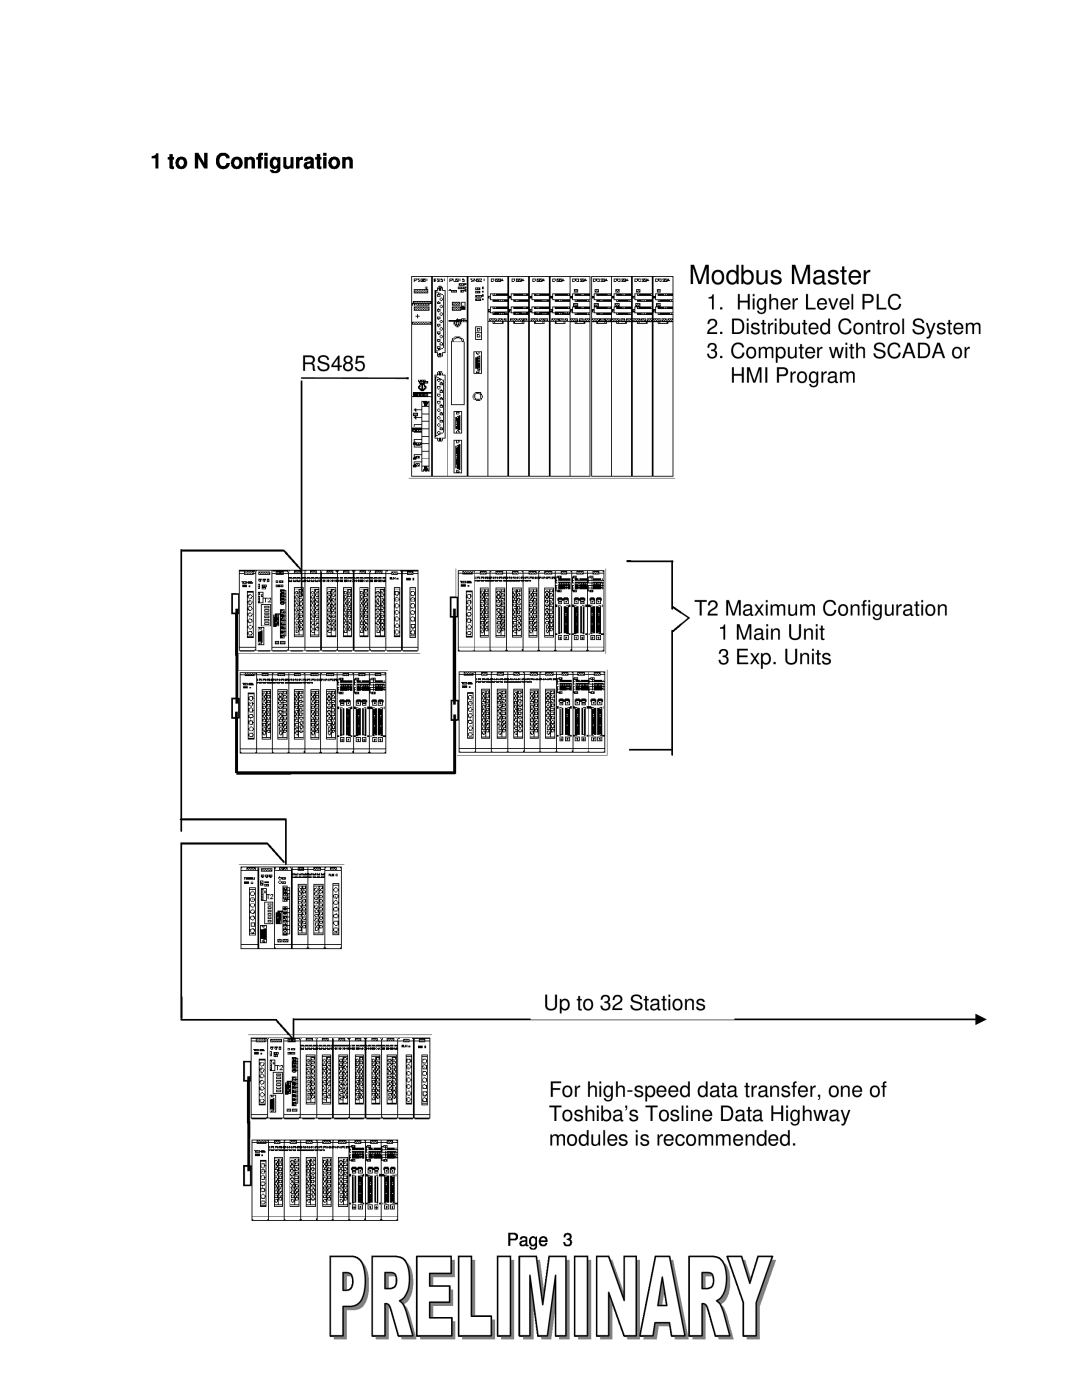 Toshiba T2 Series user manual to N Configuration, Modbus Master 